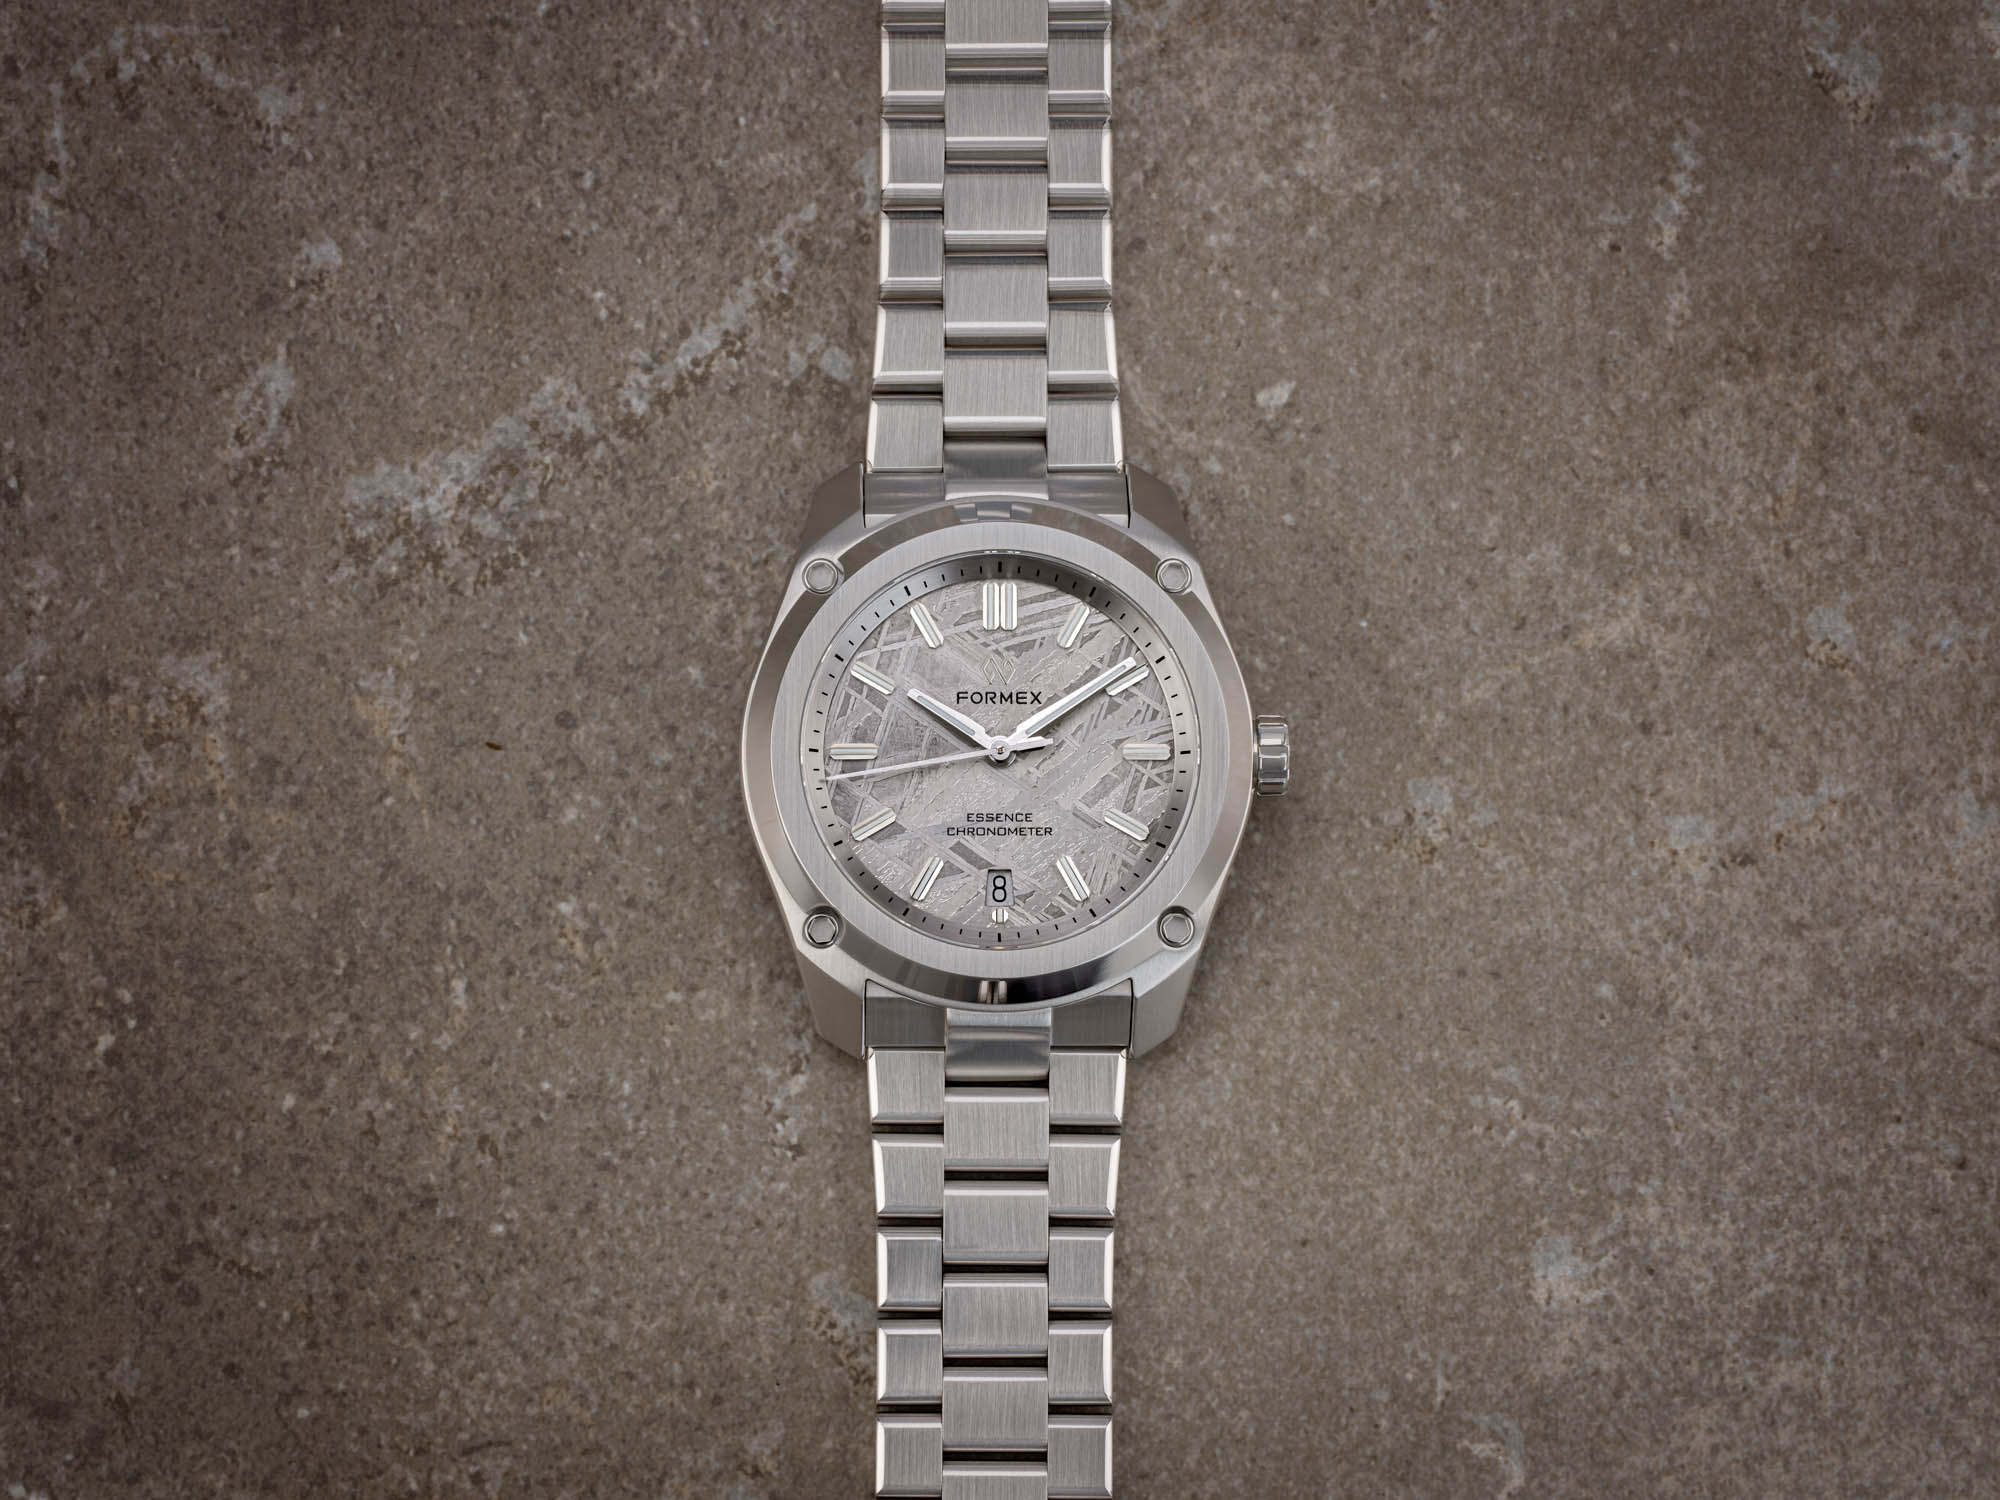 Formex представляет часы Essence 39mm и Essence Leggera 41mm Space Rock